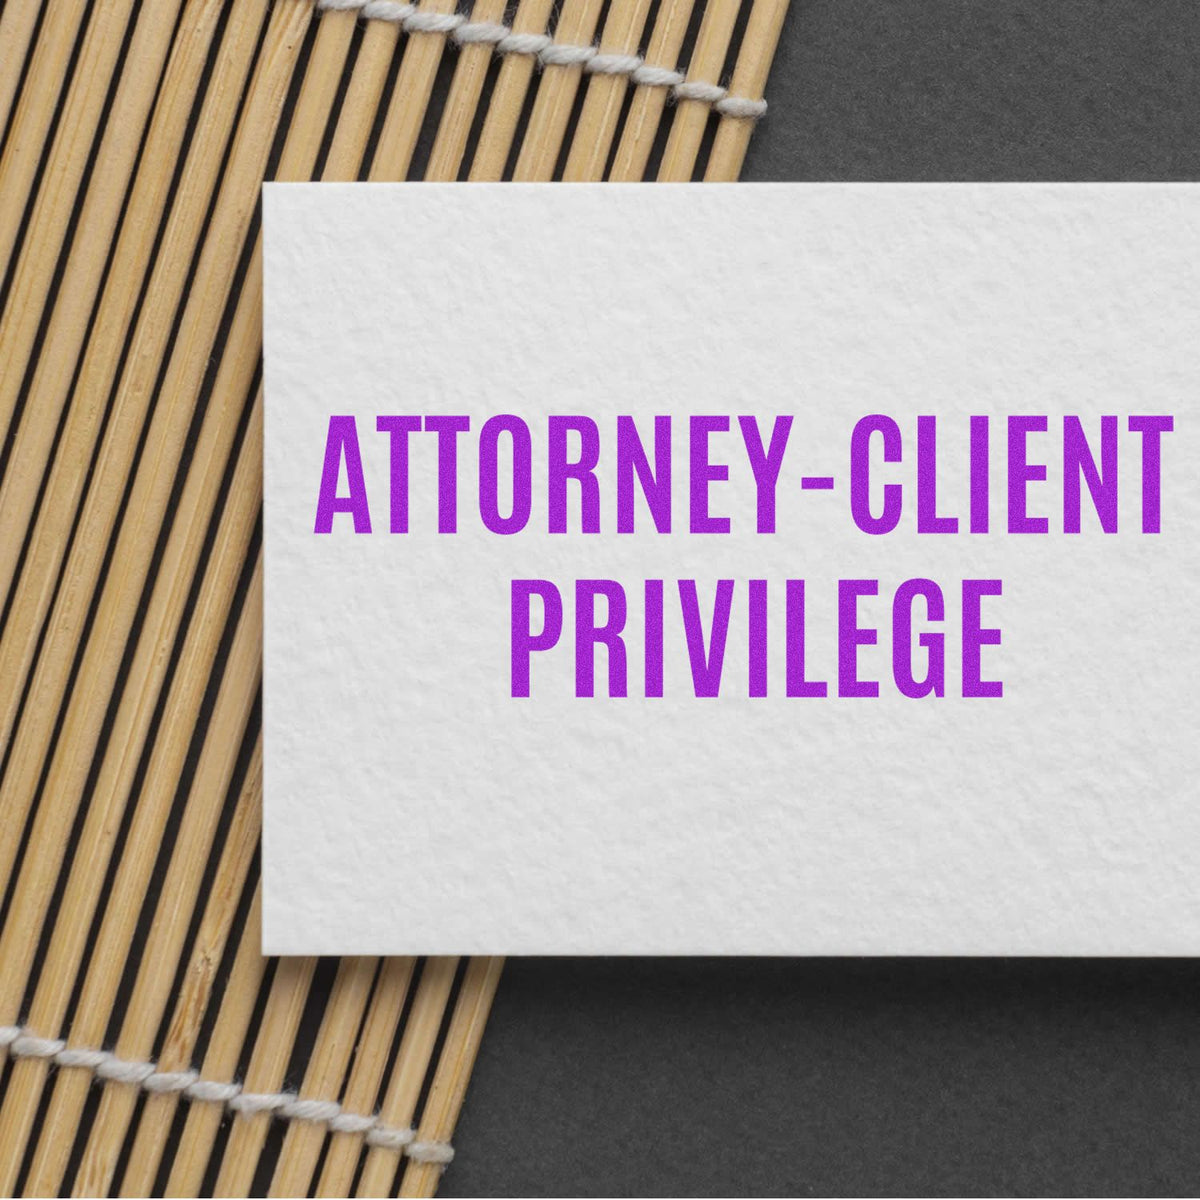 Attorney-Client Privilege Rubber Stamp In Use